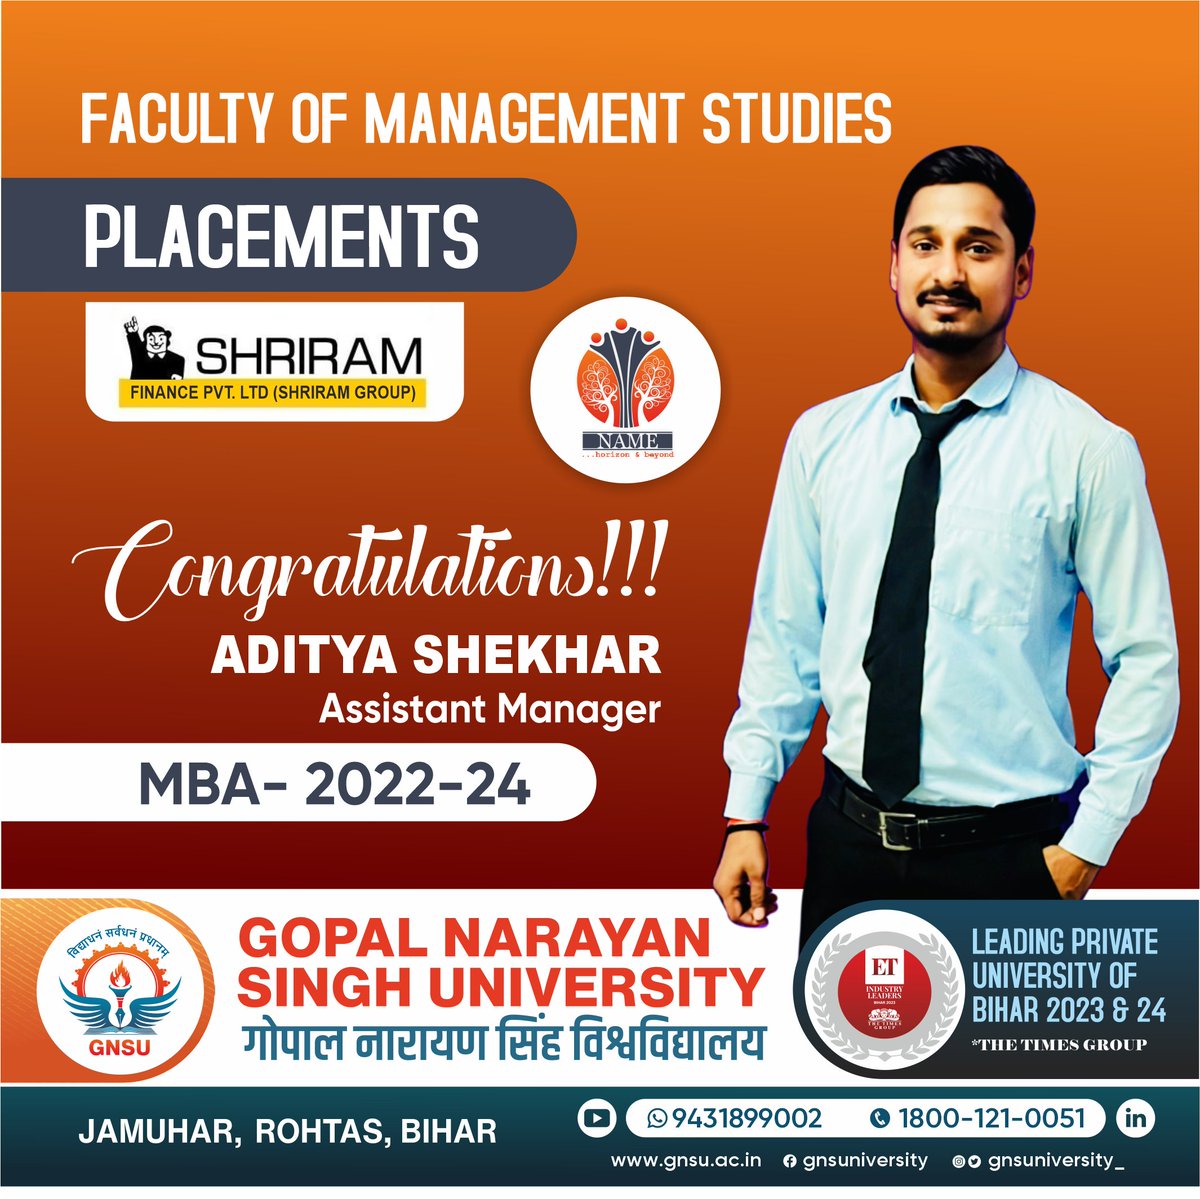 𝐂𝐨𝐧𝐠𝐫𝐚𝐭𝐮𝐥𝐚𝐭𝐢𝐨𝐧𝐬!

𝗕𝗲𝘀𝘁 𝘄𝗶𝘀𝗵𝗲𝘀 𝗳𝗼𝗿 𝘆𝗼𝘂𝗿 𝗯𝗿𝗶𝗴𝗵𝘁 𝗳𝘂𝘁𝘂𝗿𝗲 𝗮𝗵𝗲𝗮𝗱!

#gnsu #Congratulations #success #placement #studentsuccess #Bihar #bestwishes #fms #Management #assistantmanager